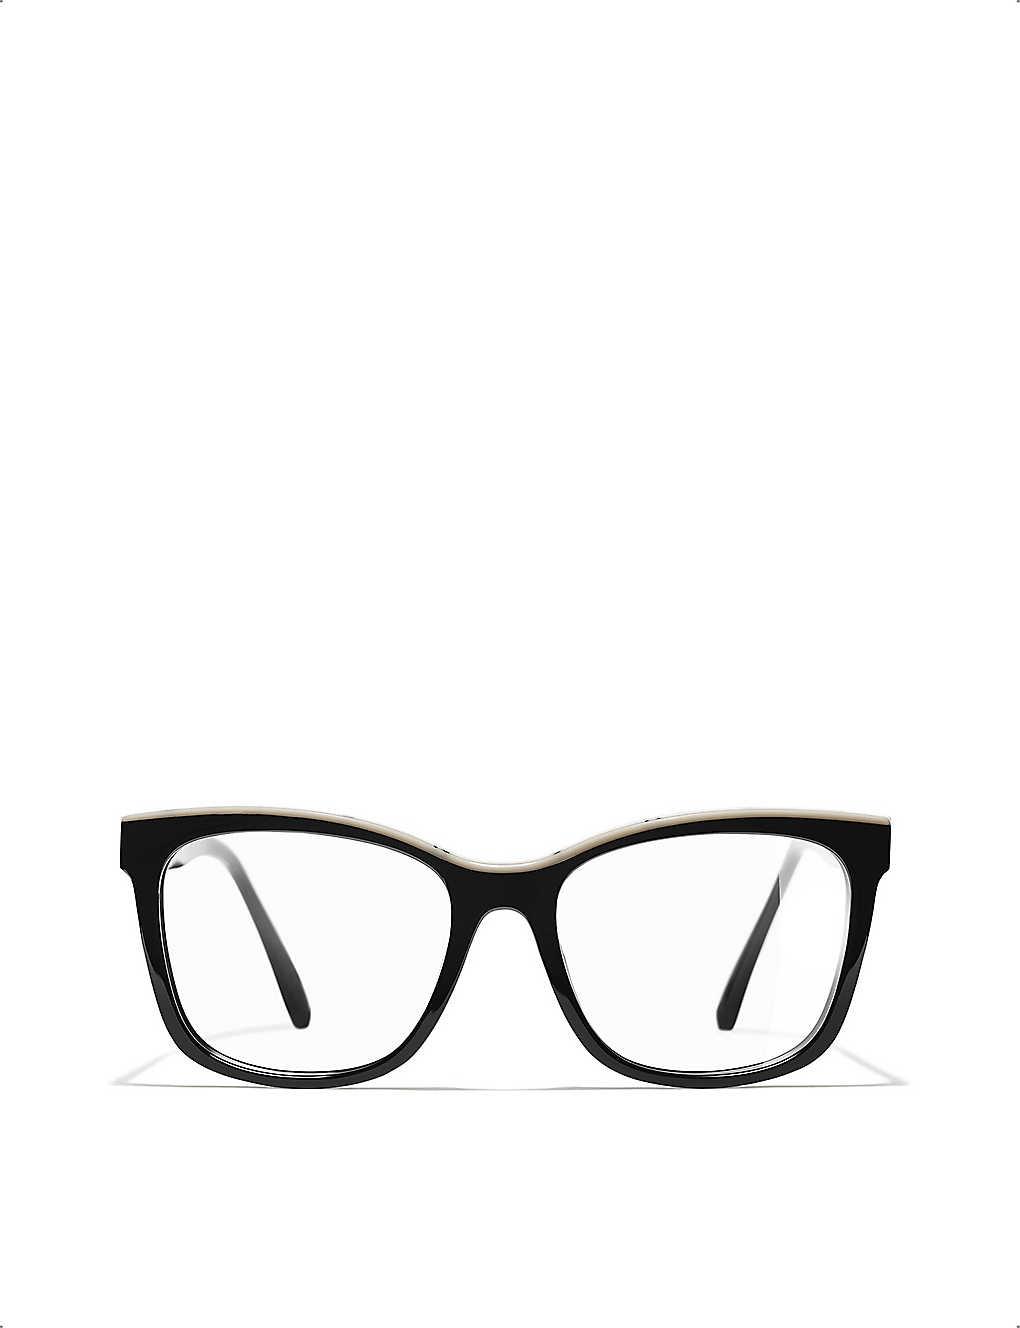 Chanel Square Eyeglasses in Black